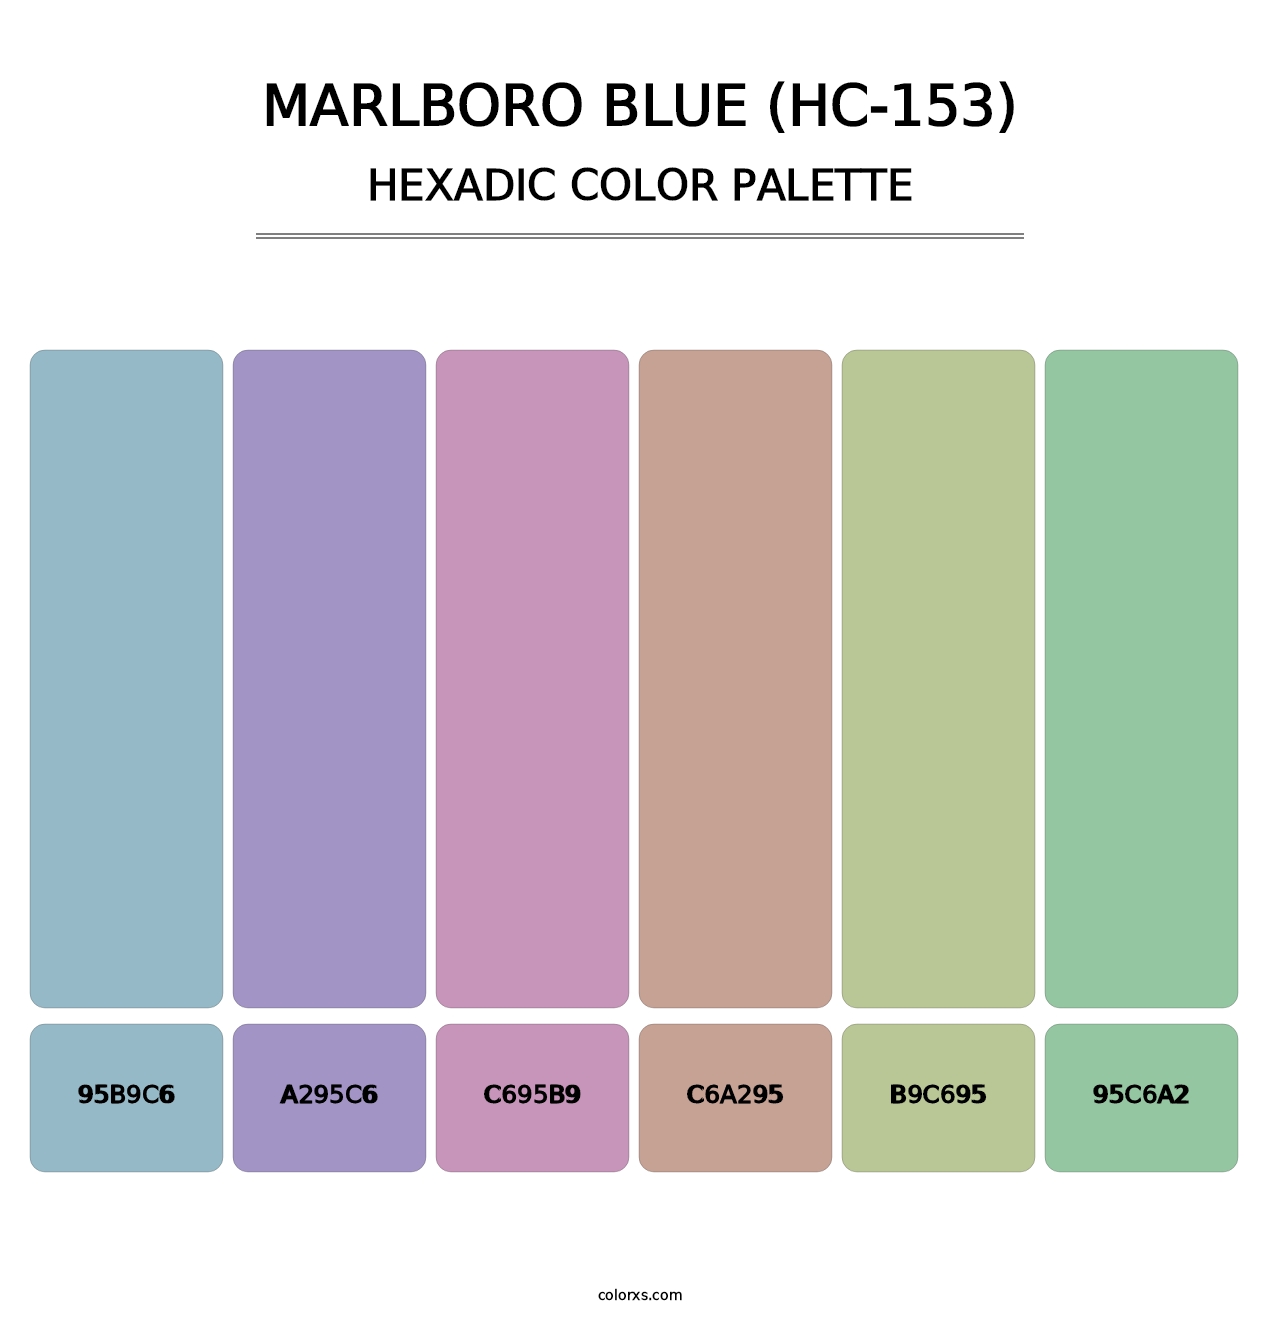 Marlboro Blue (HC-153) - Hexadic Color Palette